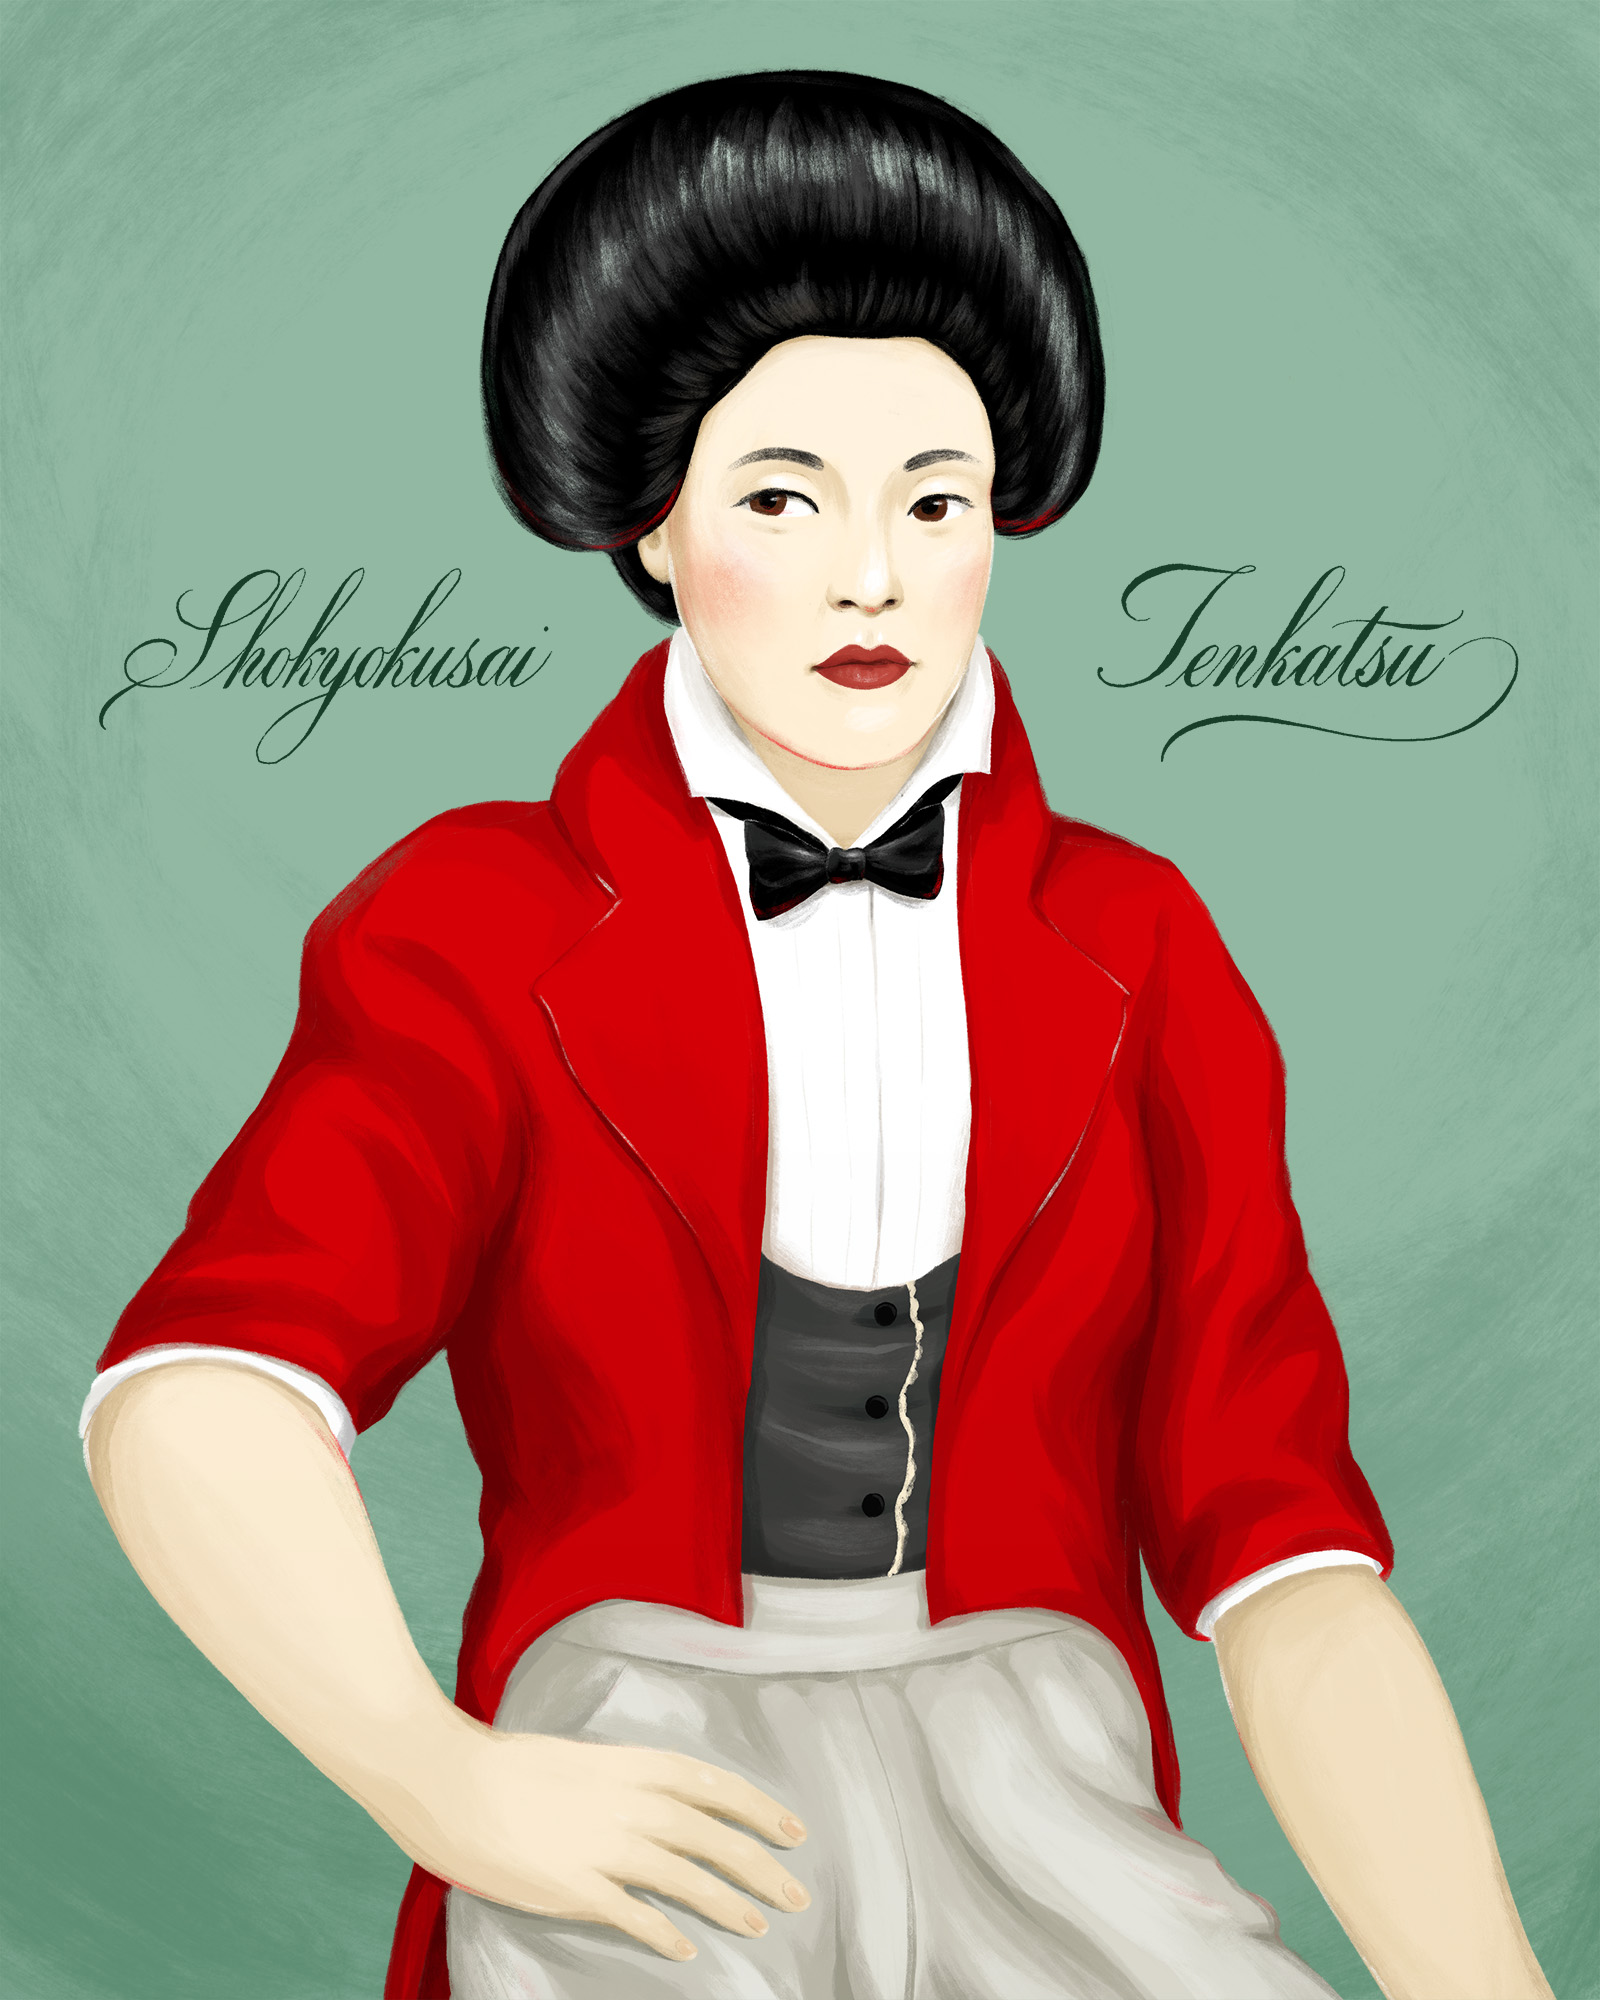 Illustrated portrait of Shokyokusai Tenkatsu